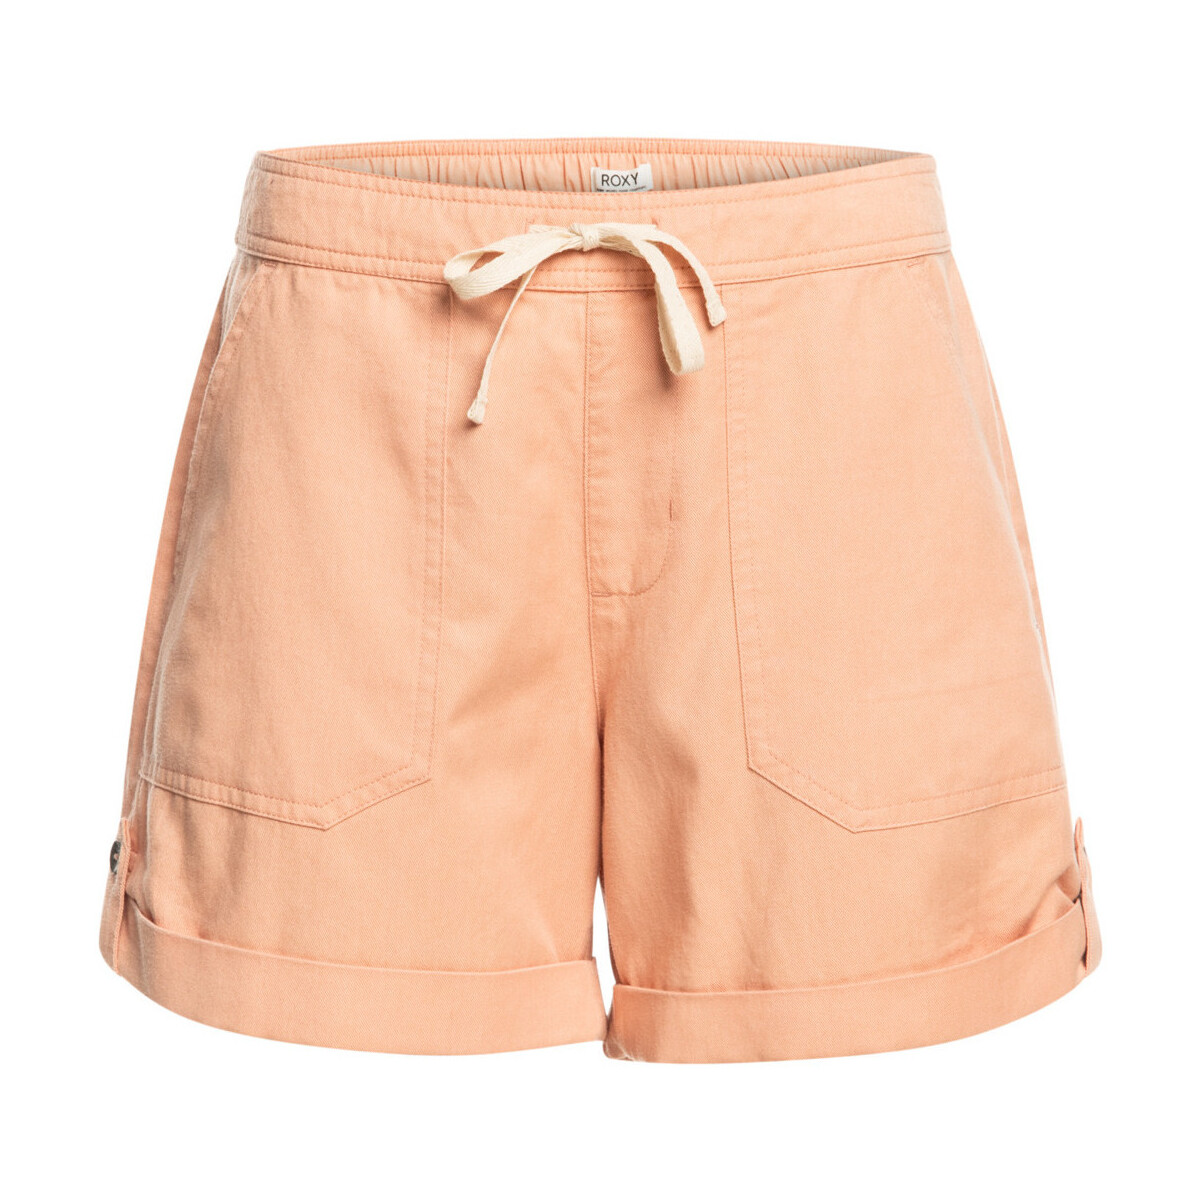 Vêtements Fille Shorts / Bermudas Roxy Sweetest Life Beige